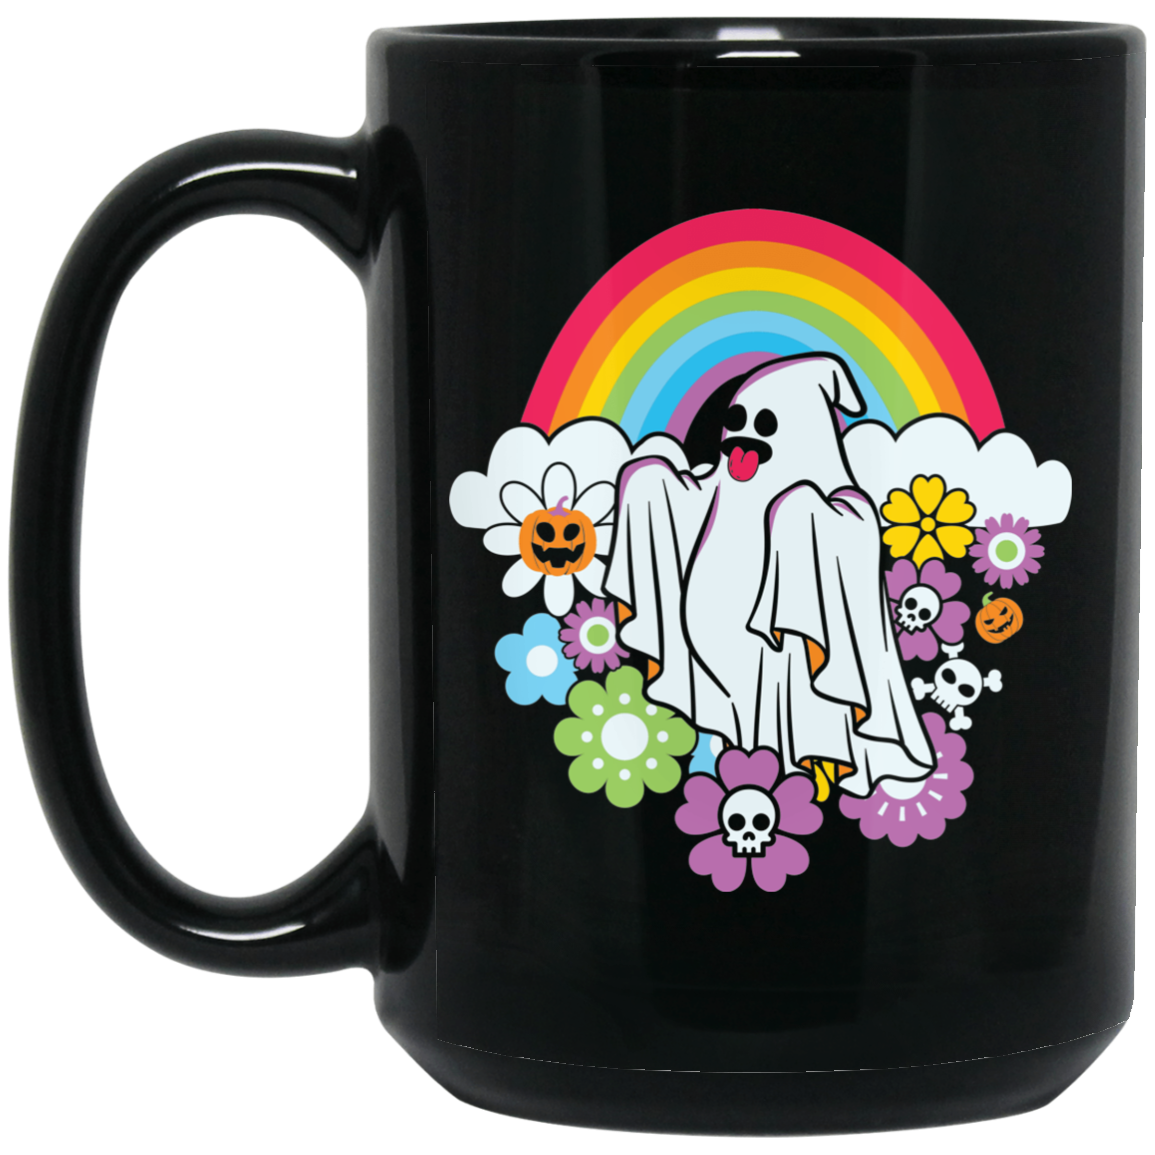 Retro Spooky Ghost |15 oz. Black Mug